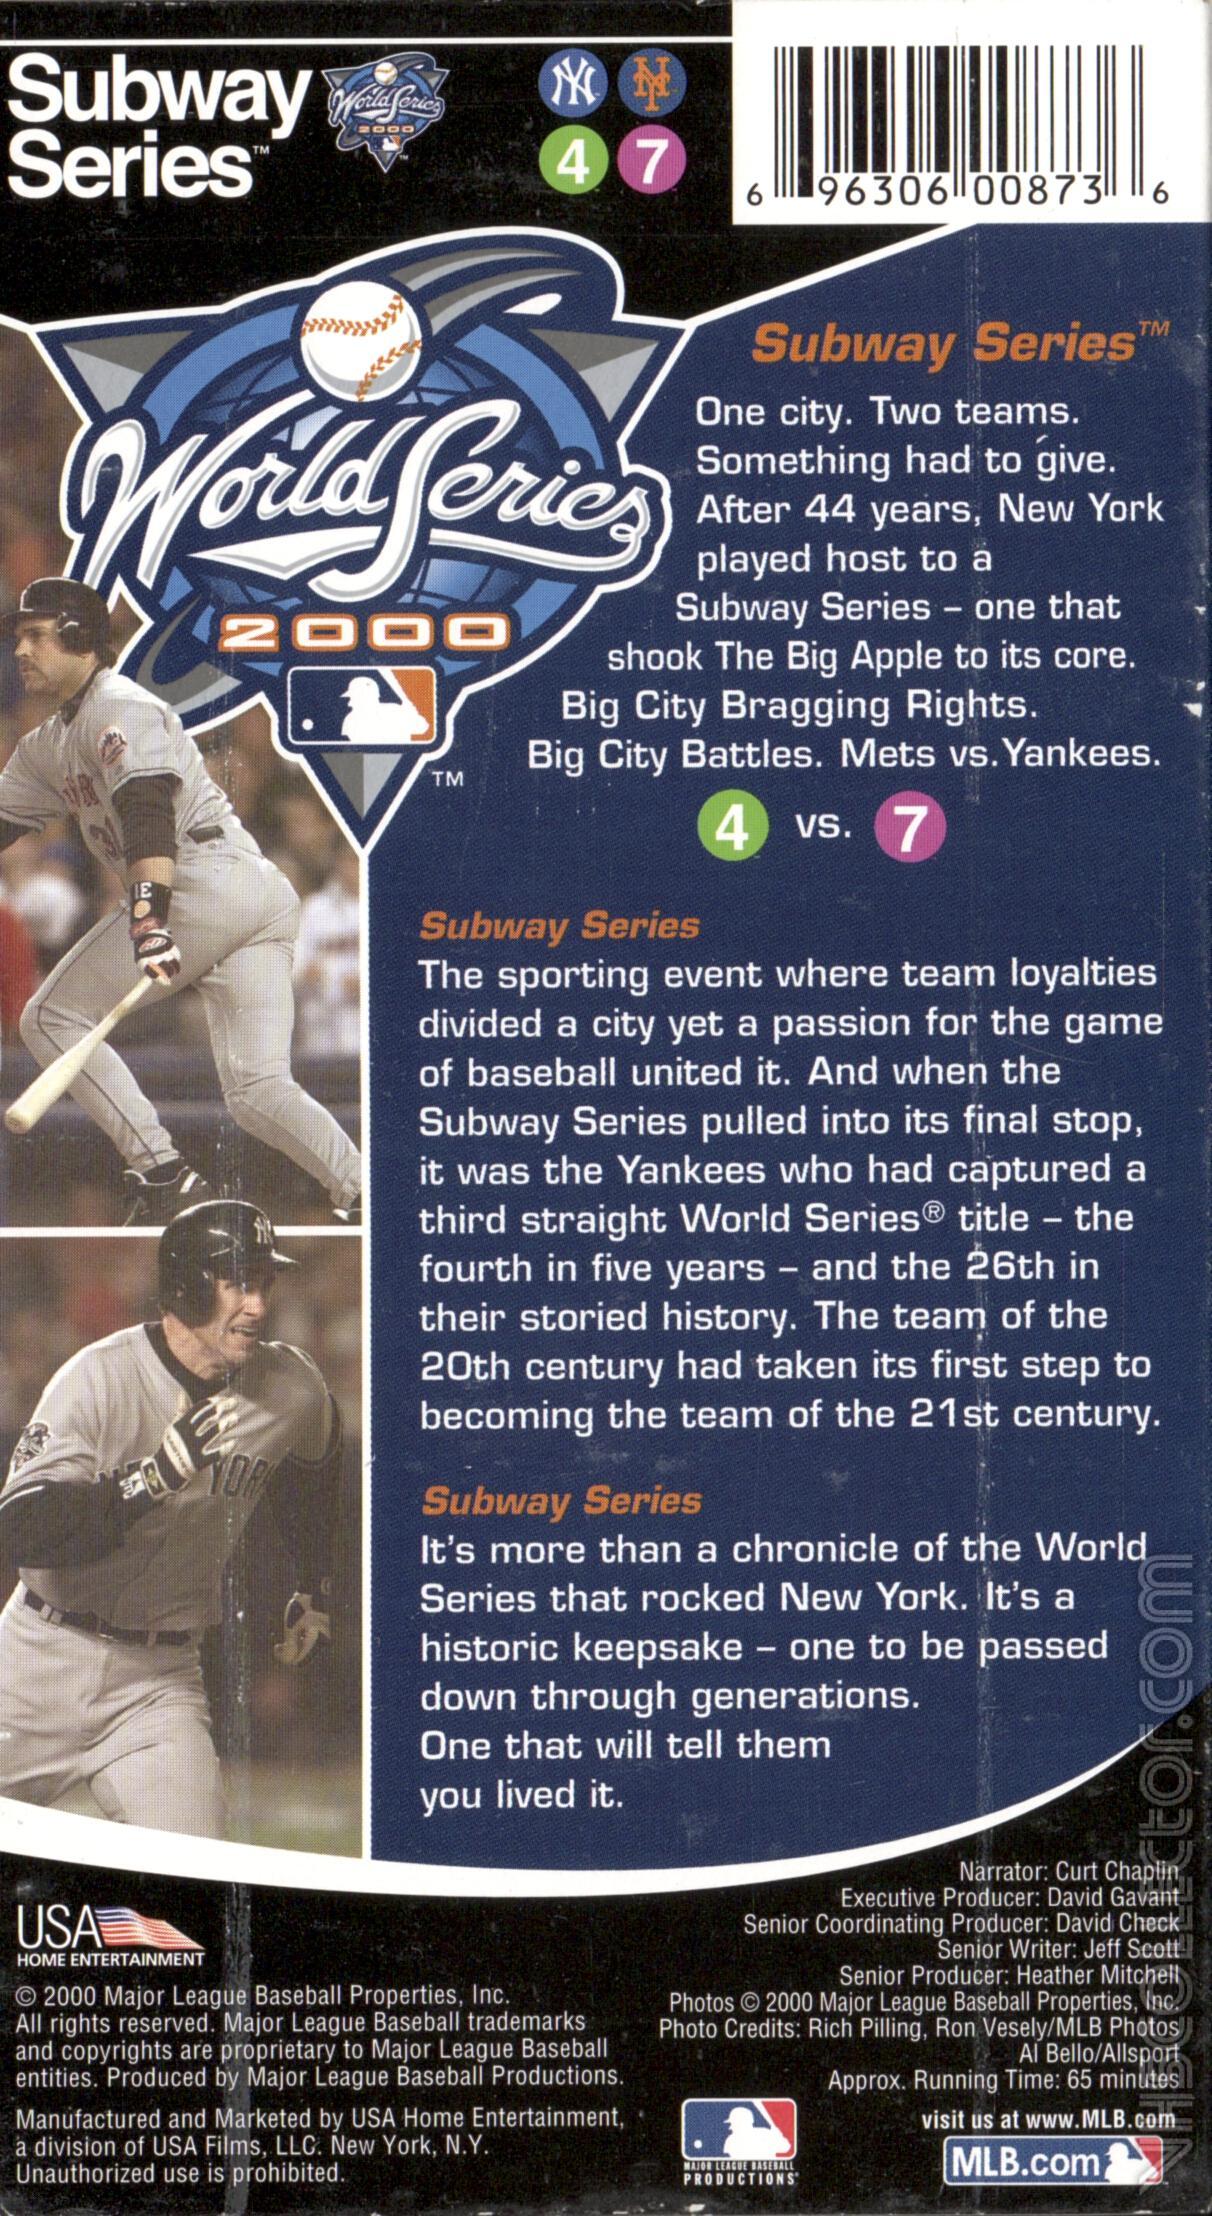 World Series 2000: Subway Series